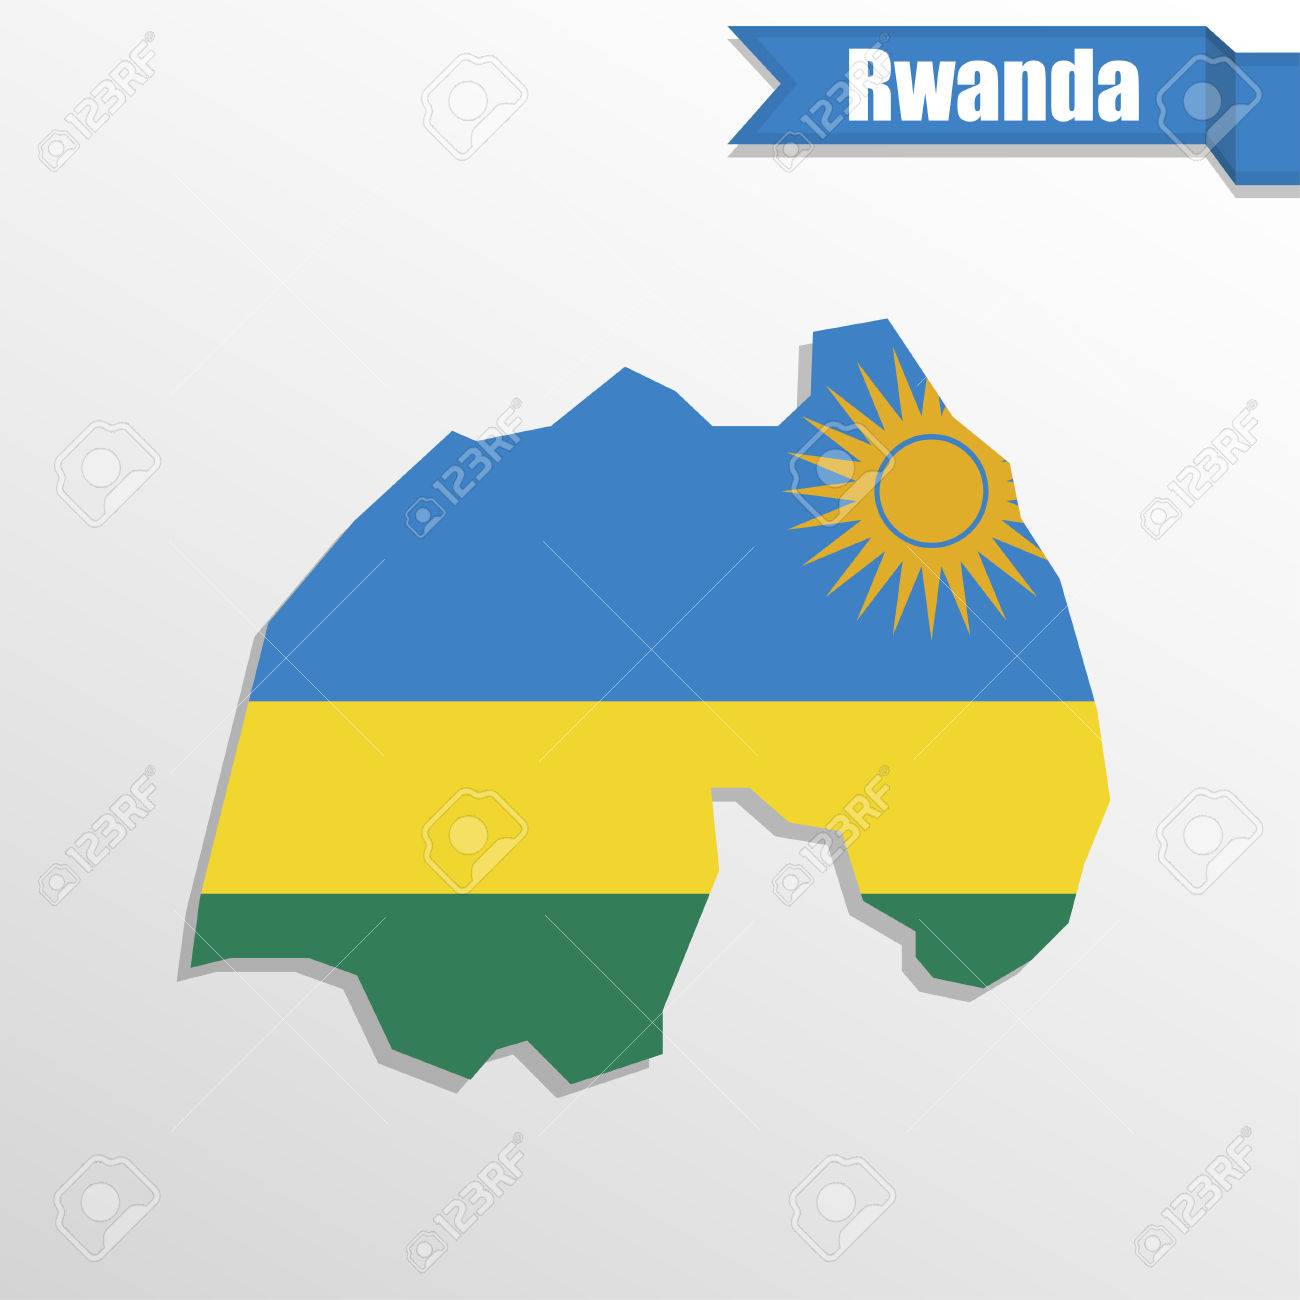 trademark attorney in Rwanda trademark registration Rwanda intellectual property